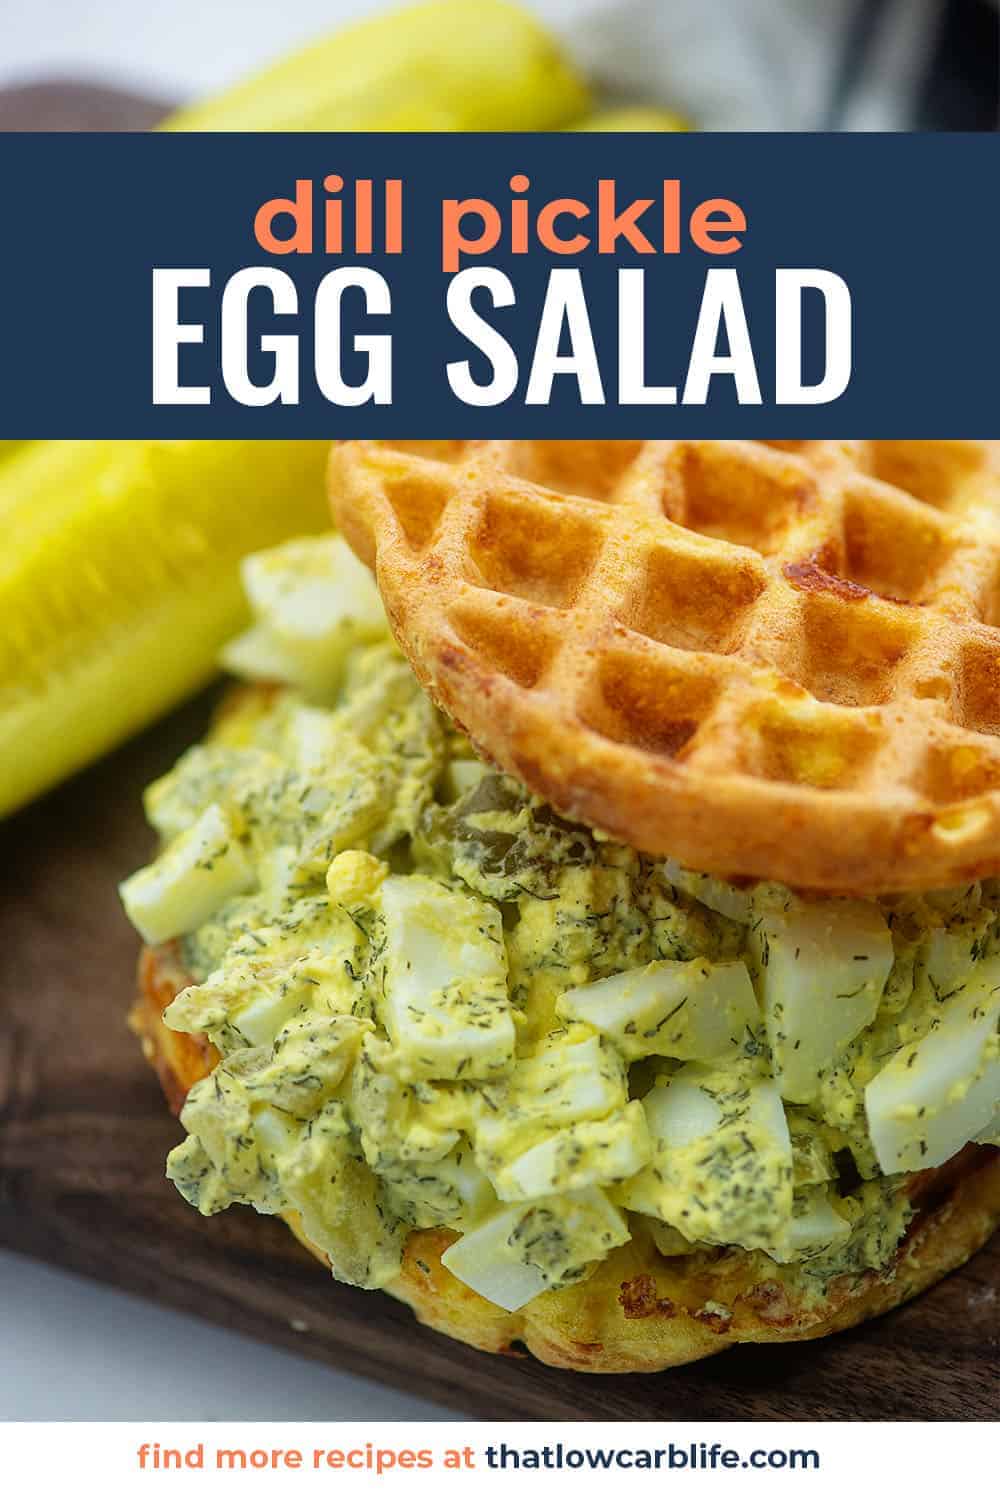 dill pickle egg salad on chaffle bun